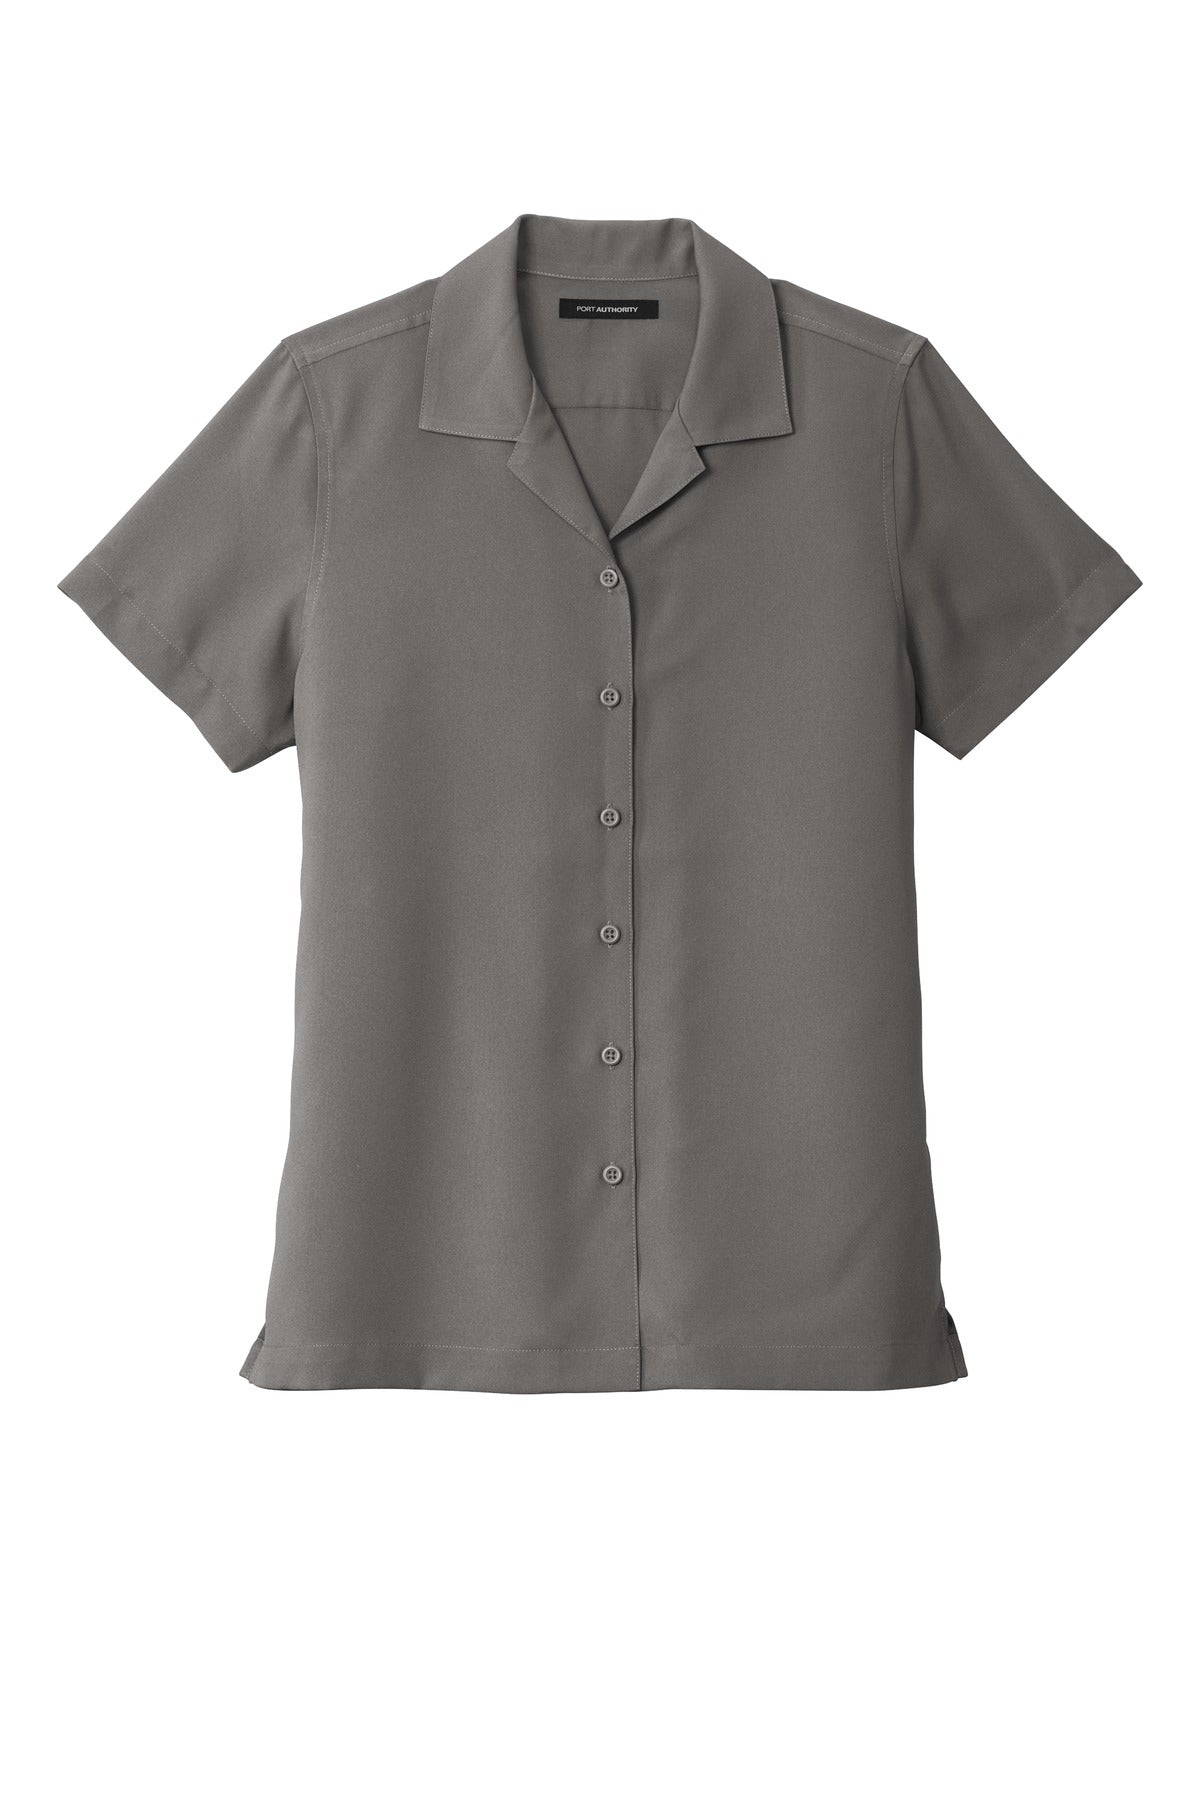 Port Authority ® Ladies Short Sleeve Performance Staff Shirt